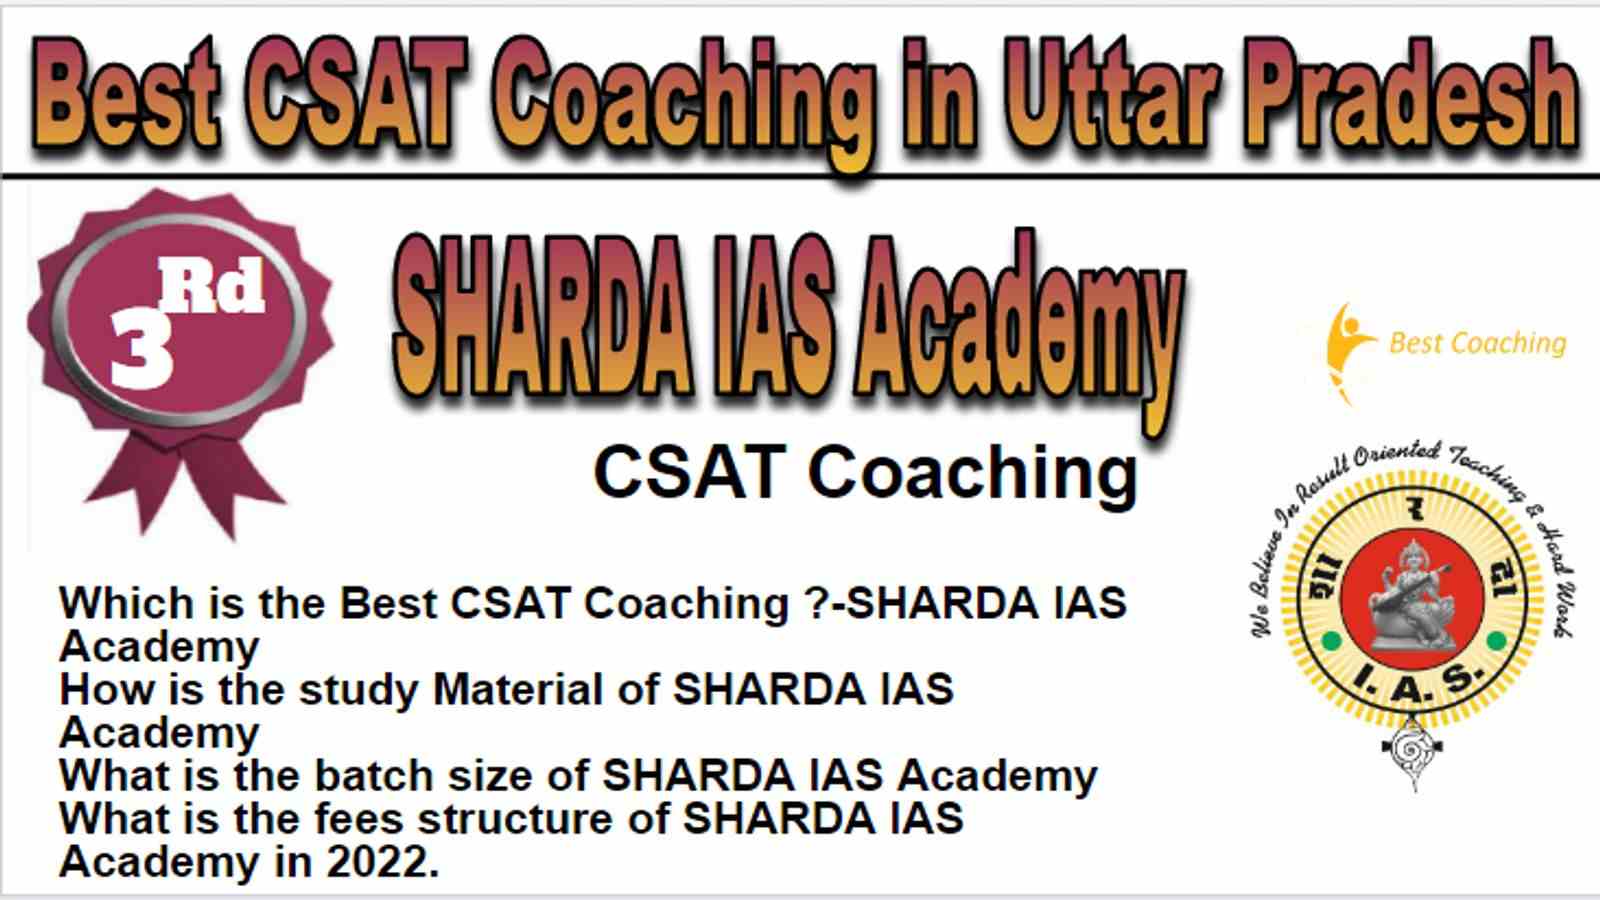 Rank 3 Best CSAT Coaching in Uttar Pradesh